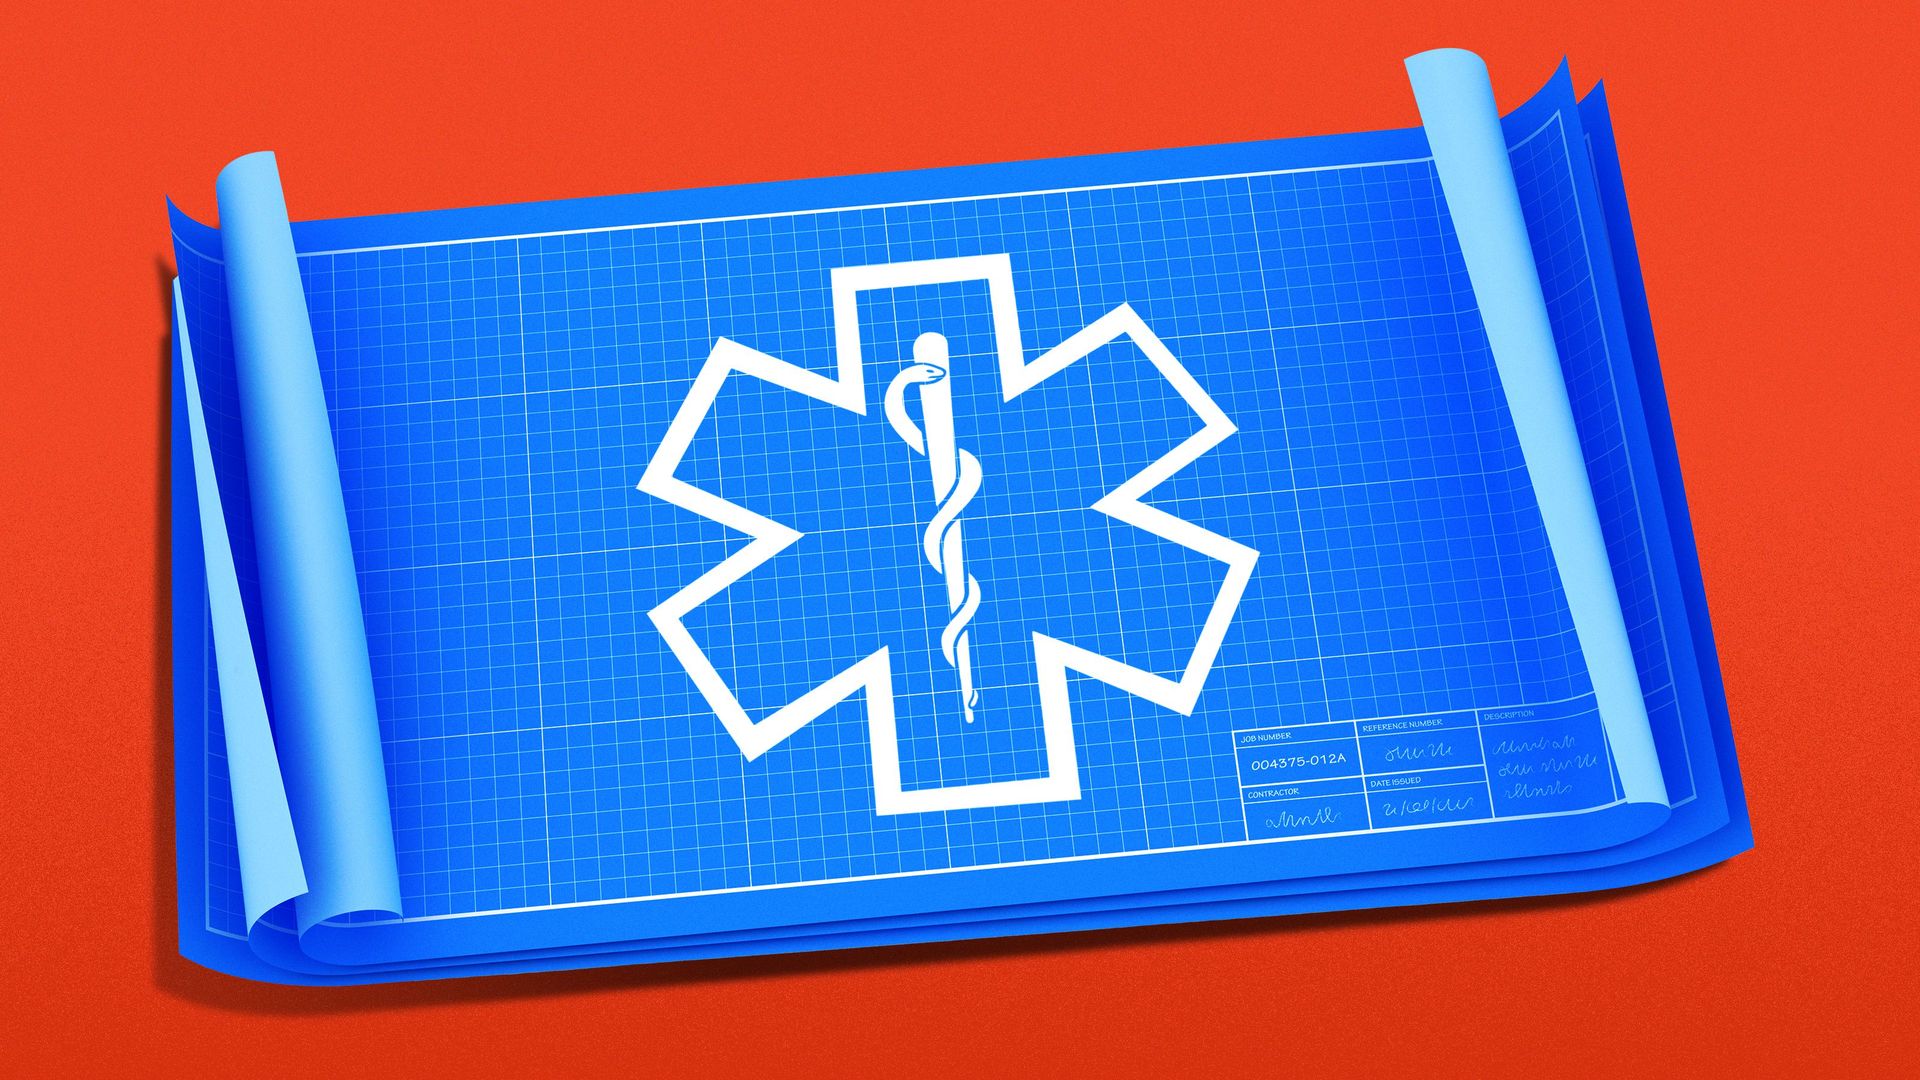 Illustration of blueprints with am ambulance emergency symbol drawn.